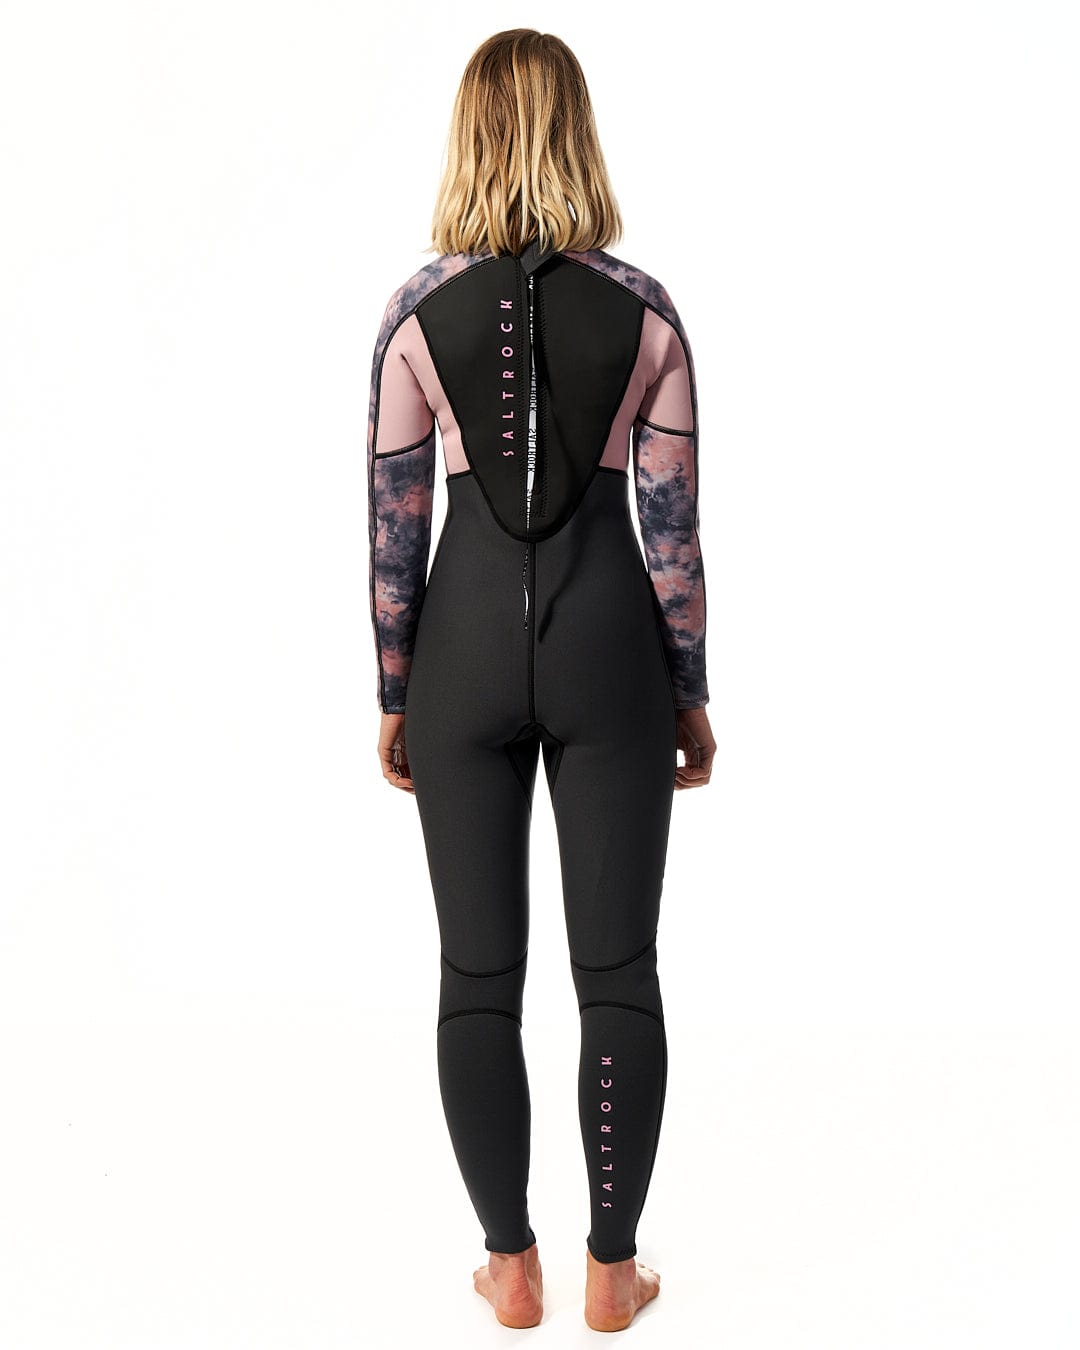 A woman wearing a Saltrock Vision - Womens 3/2 Back Zip Wetsuit - Black/Pink.